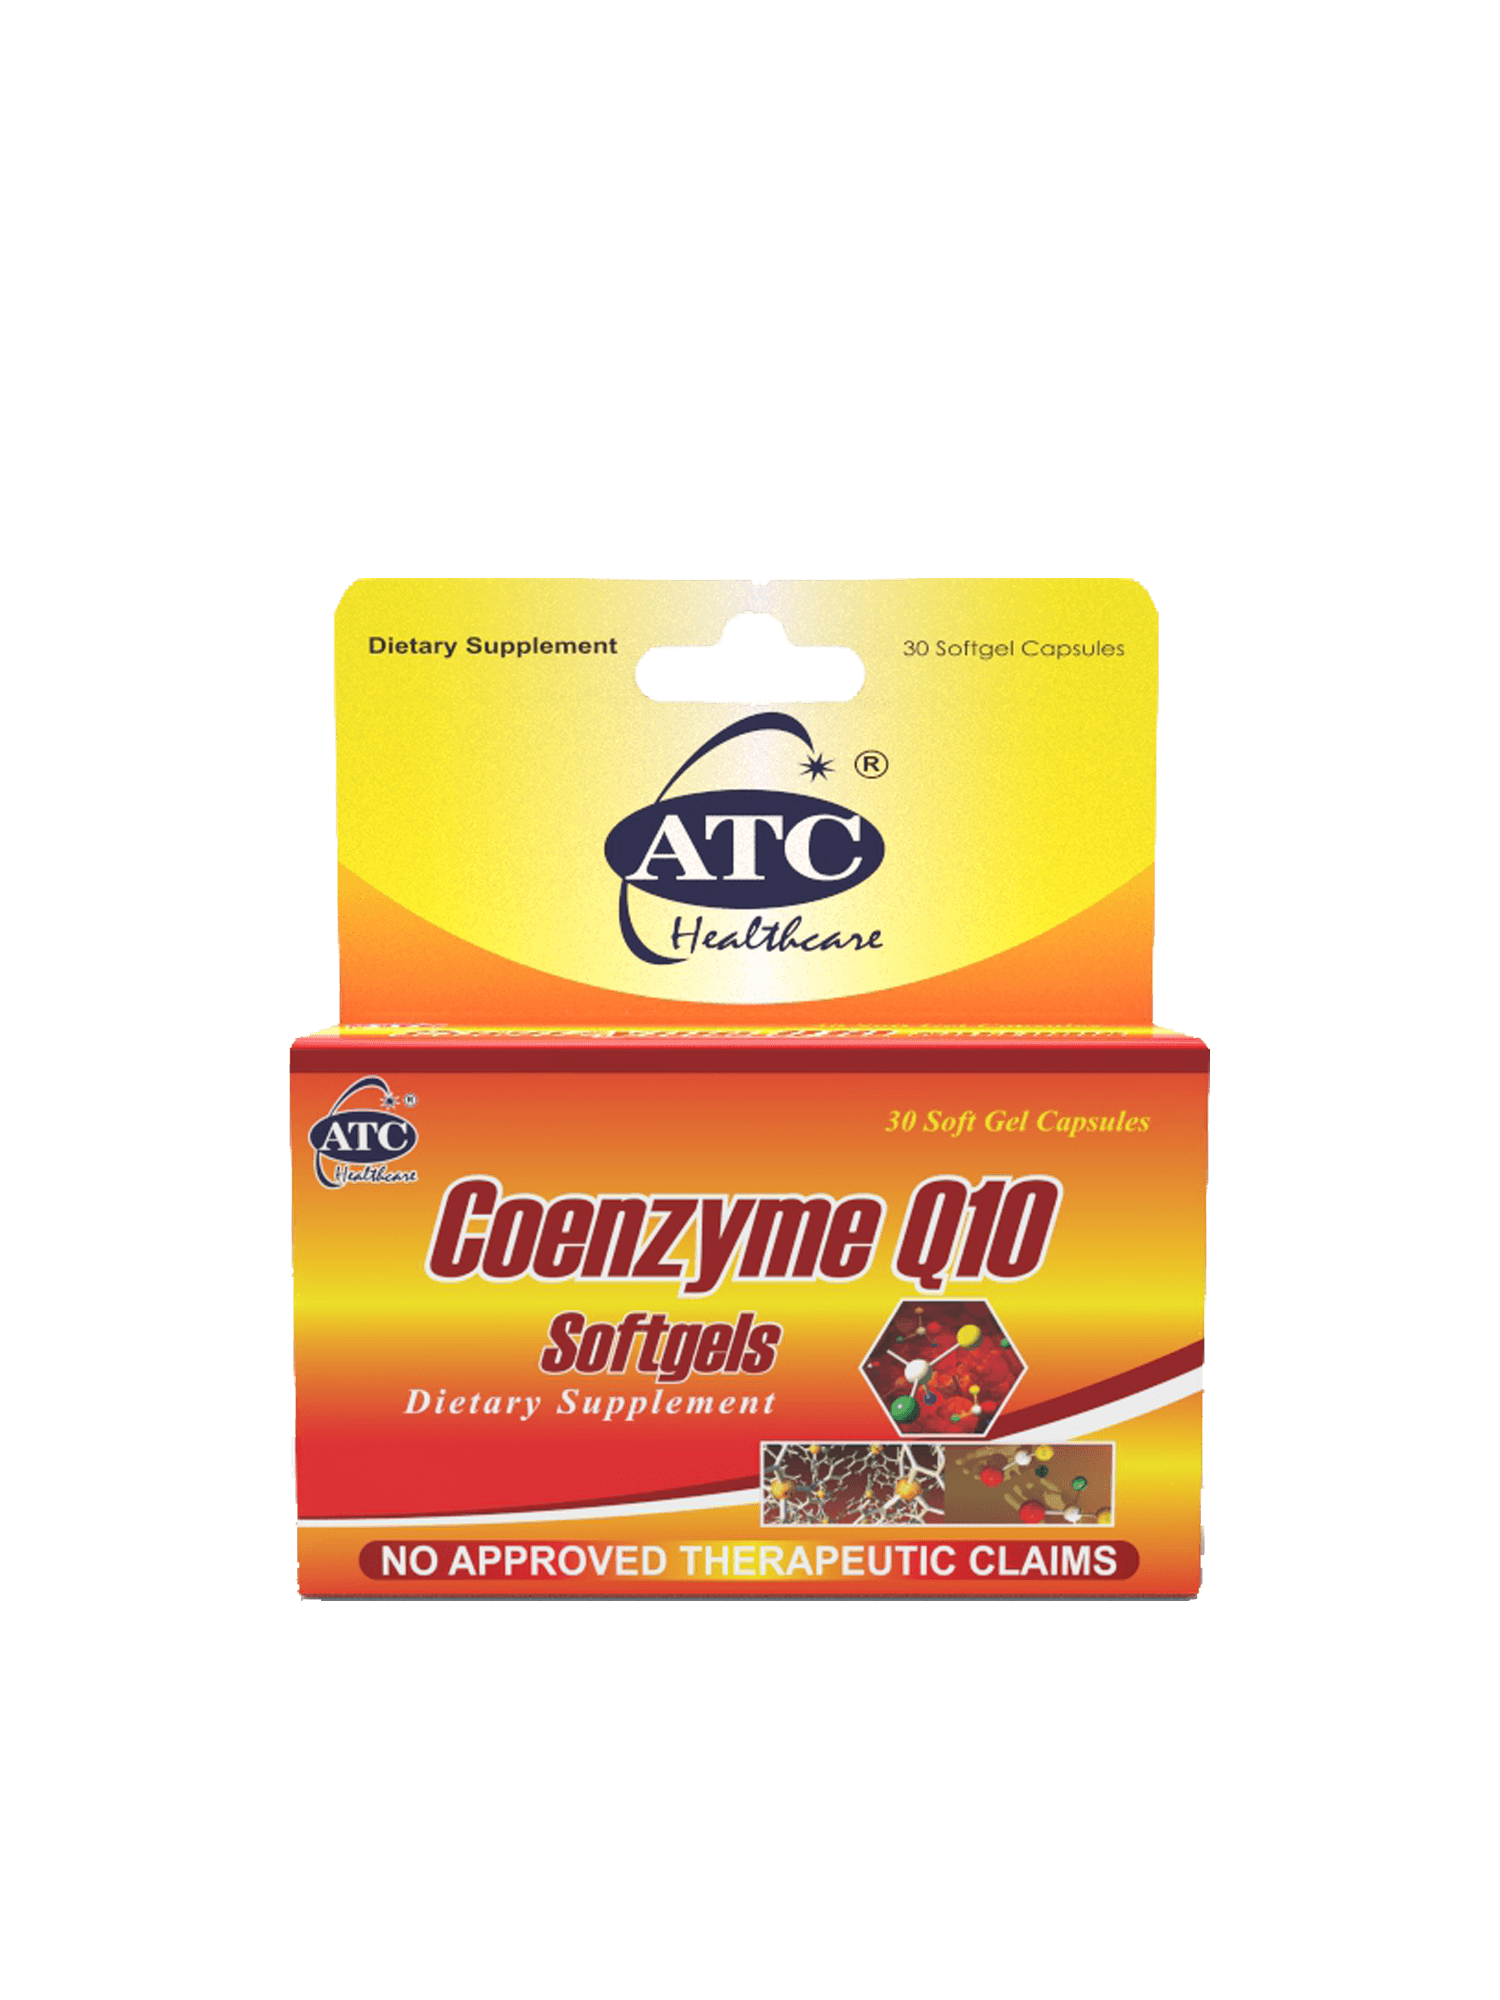 atc-coenzyme-q10